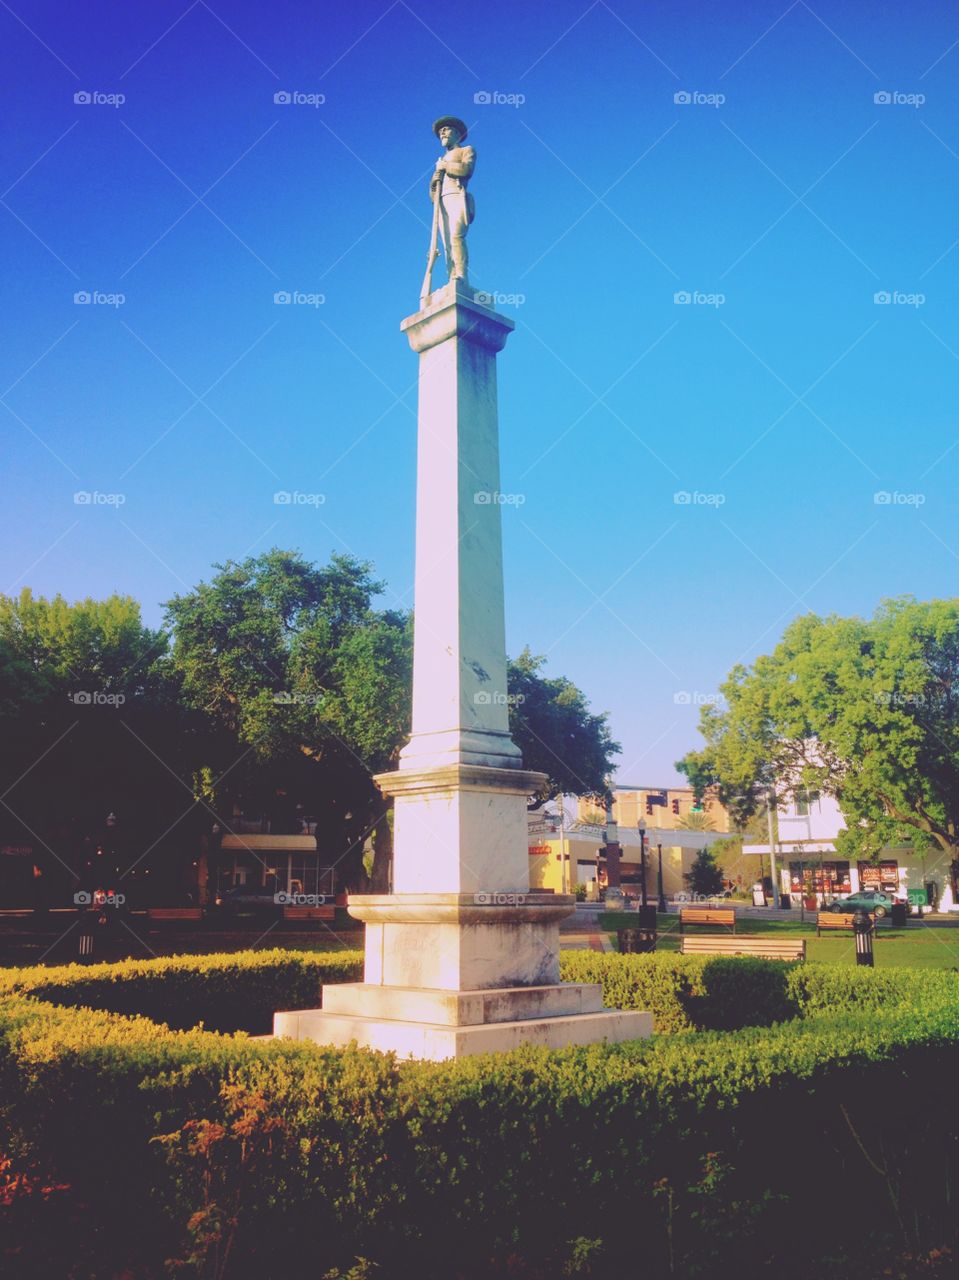 Civil war statue . Civil war memorial statue in the town square 